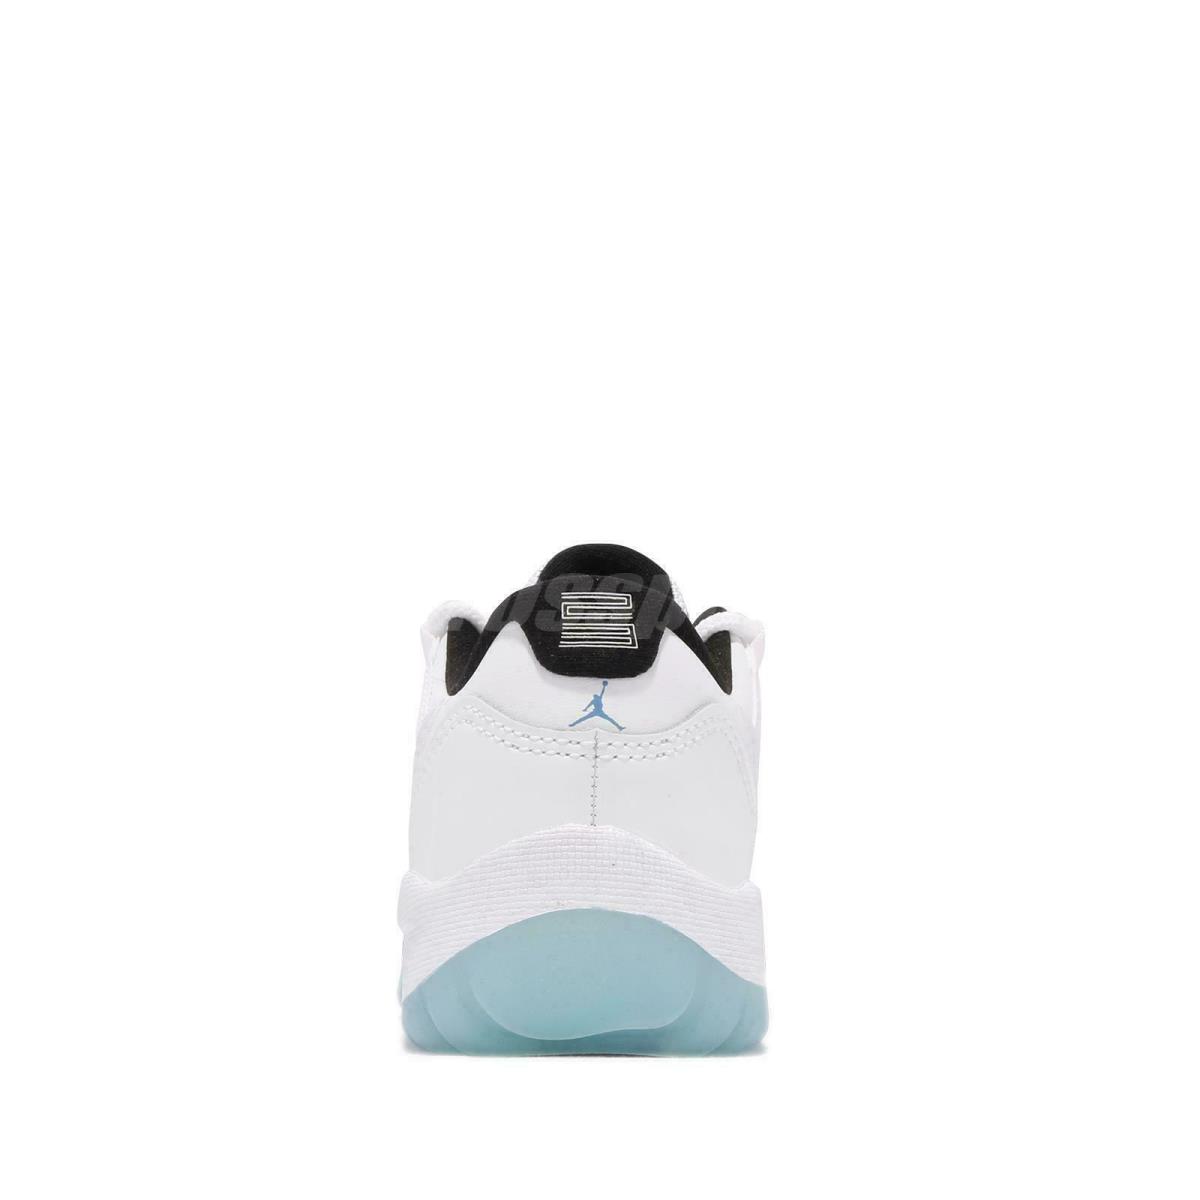 Nike shoes Shoe - White 4